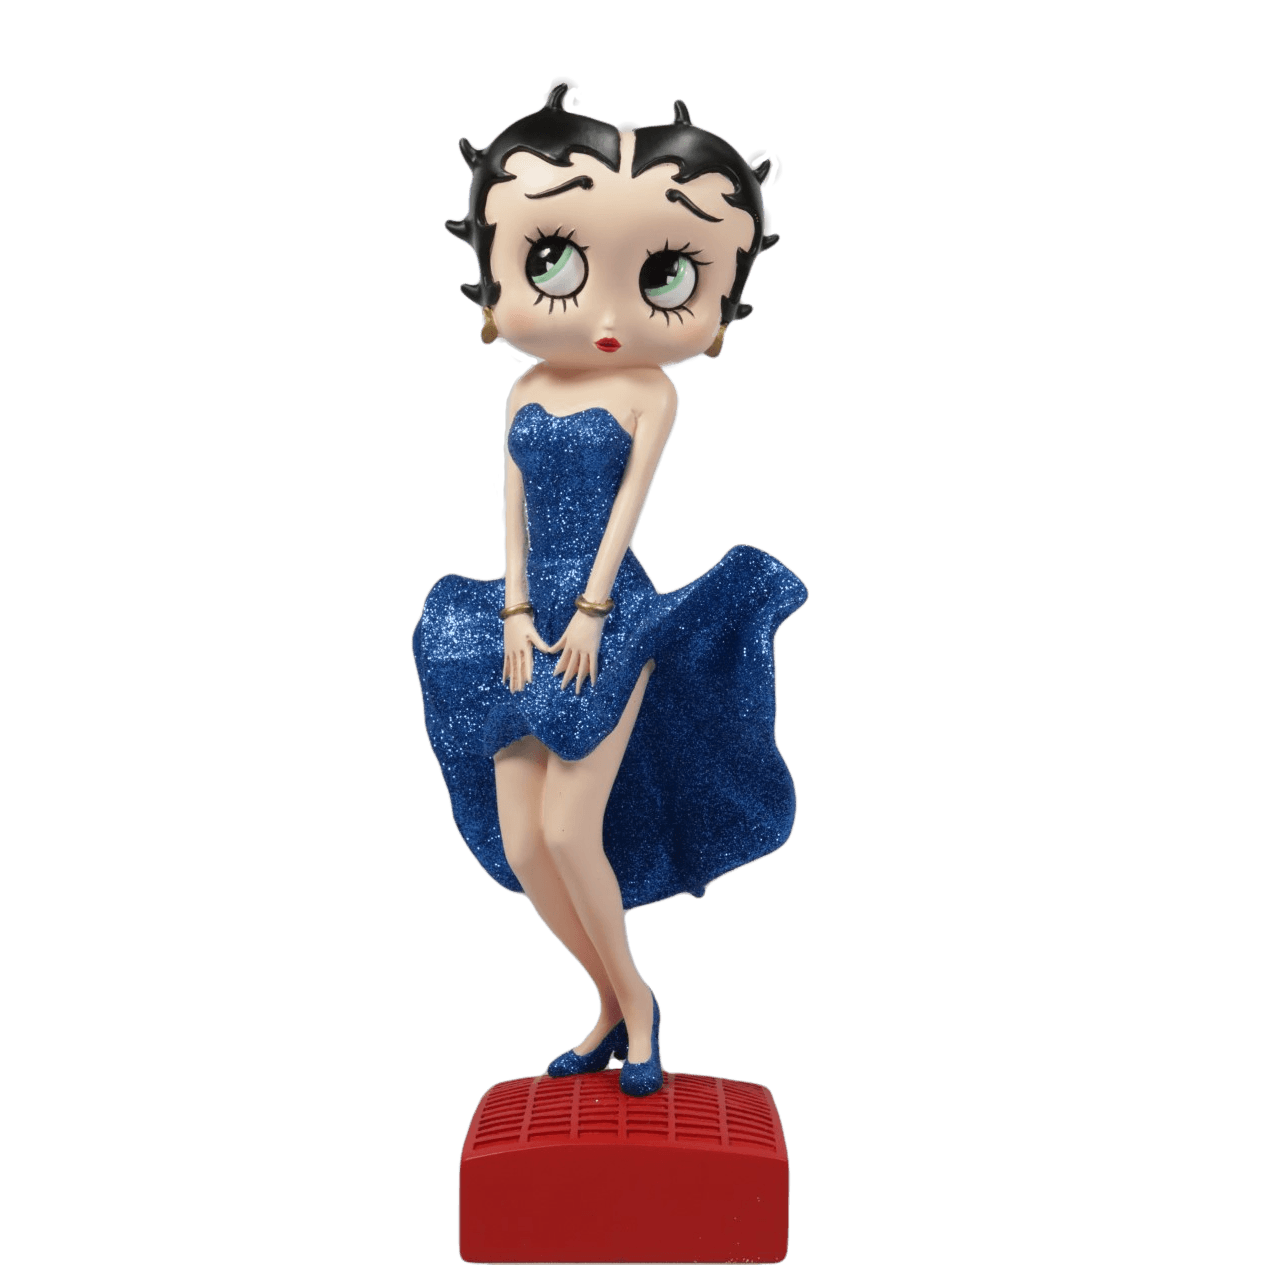 Betty Boop Posing Blue Glitter Dress (Betty Boop) - Gallery Gifts Online 